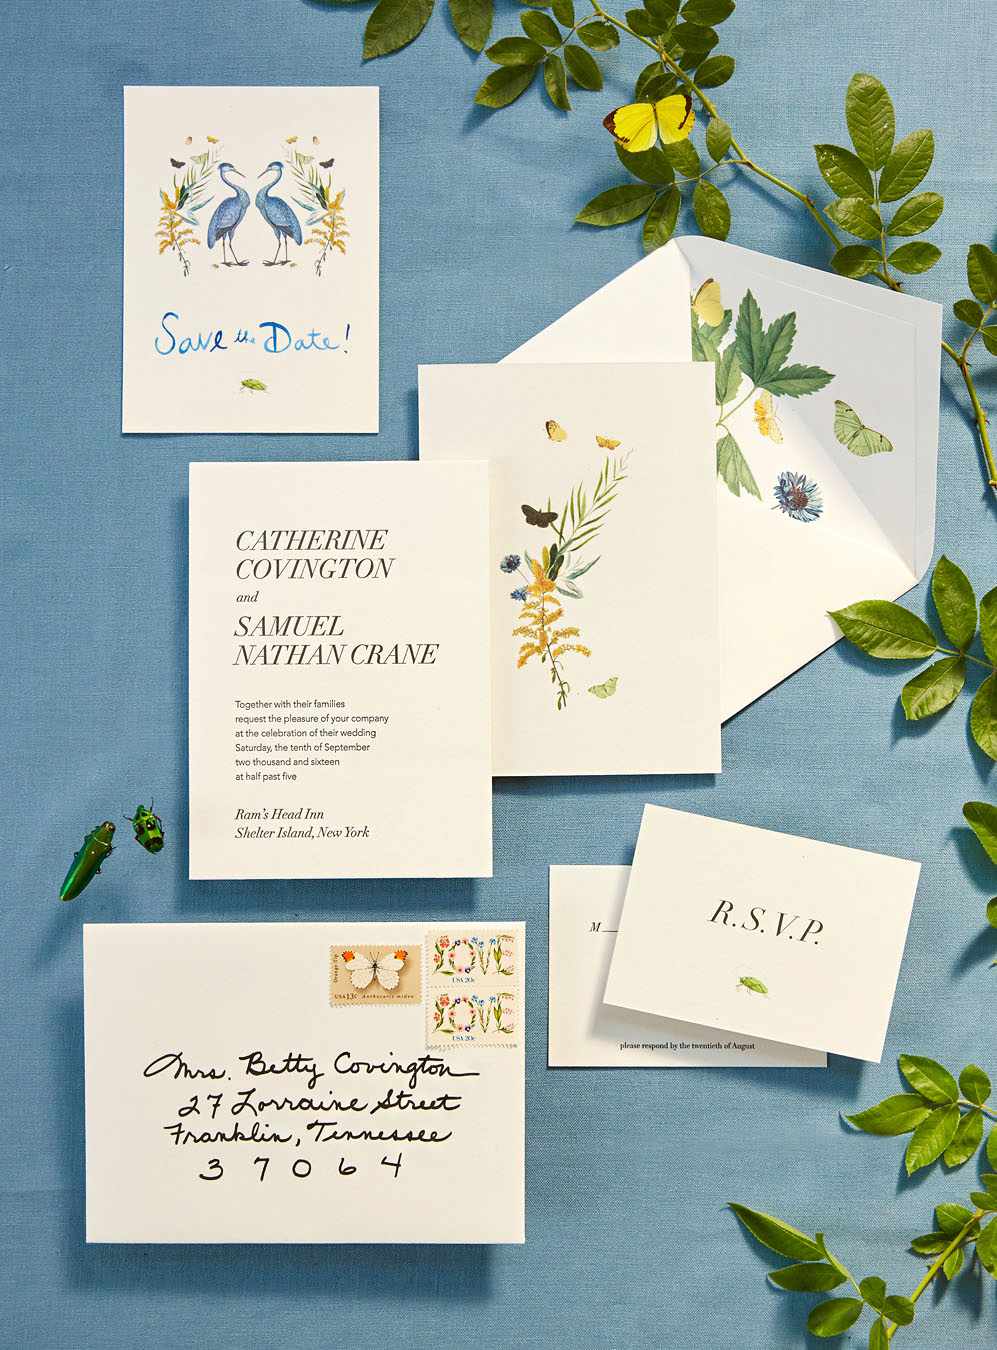 Invitations Designed by the Bride